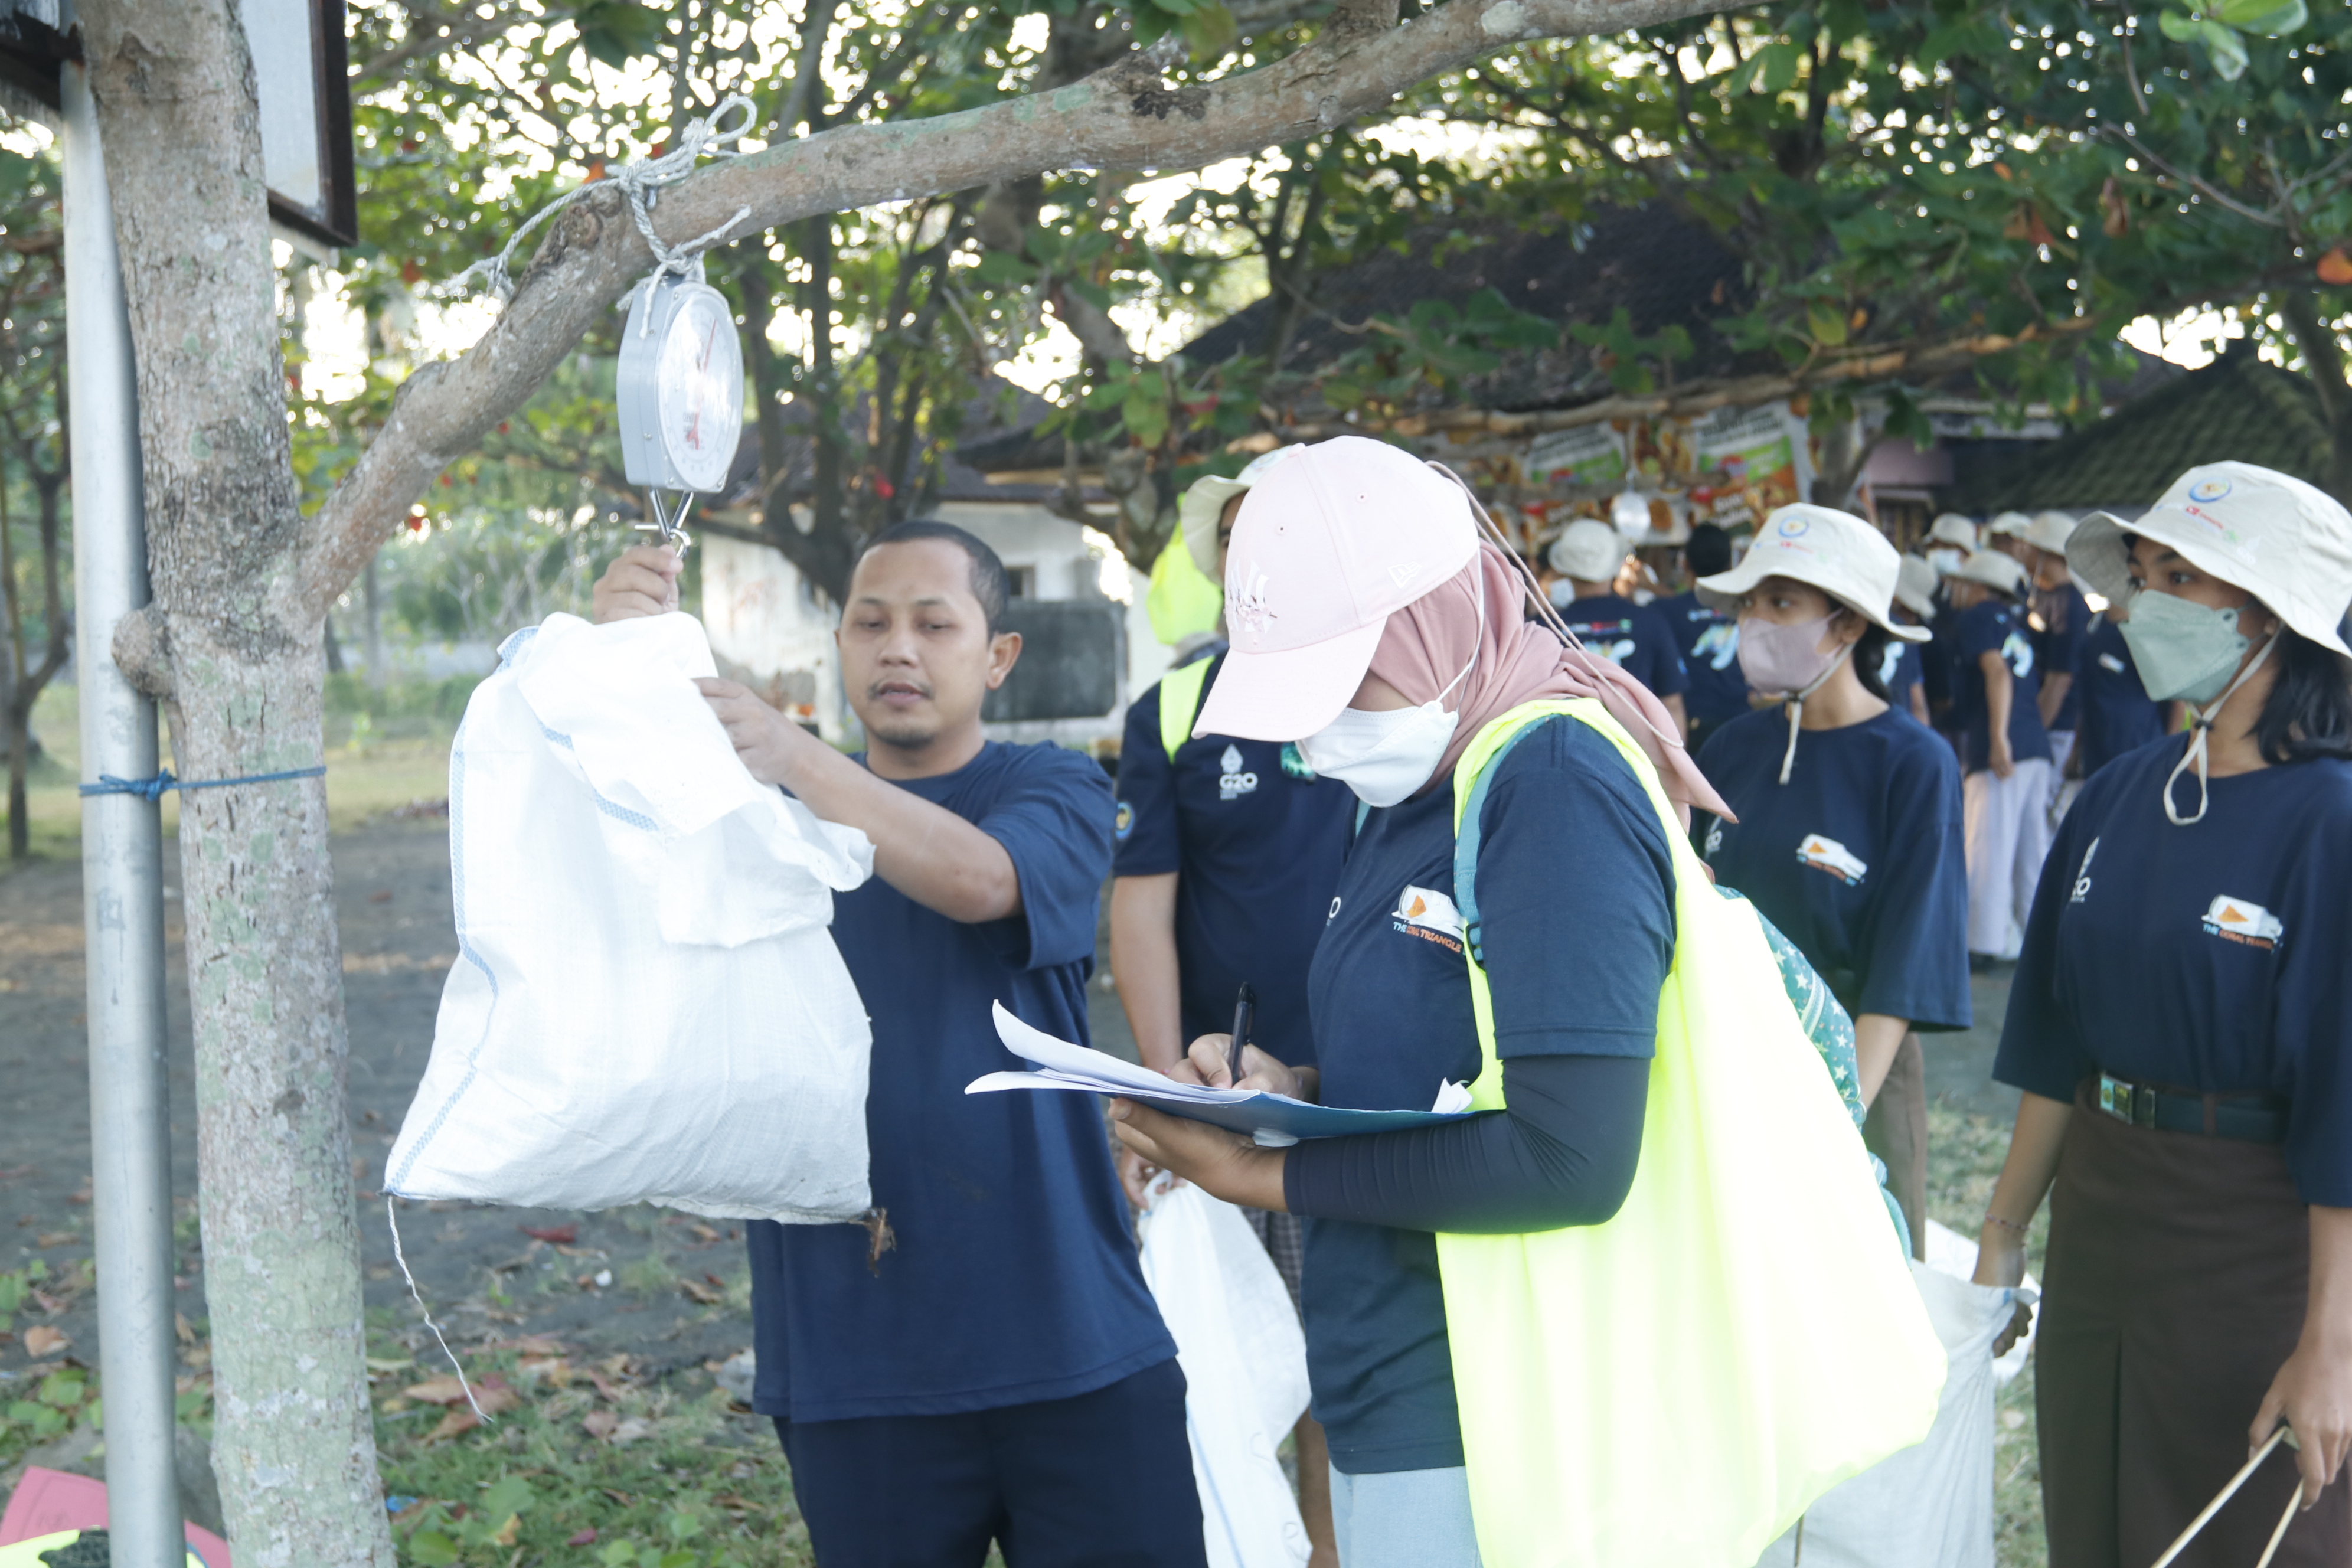 Gerakan Bersih Pantai dan Laut/GBPL dalam rangka Coral Triangle Day di Pantai Perancak - Bali (29/7).